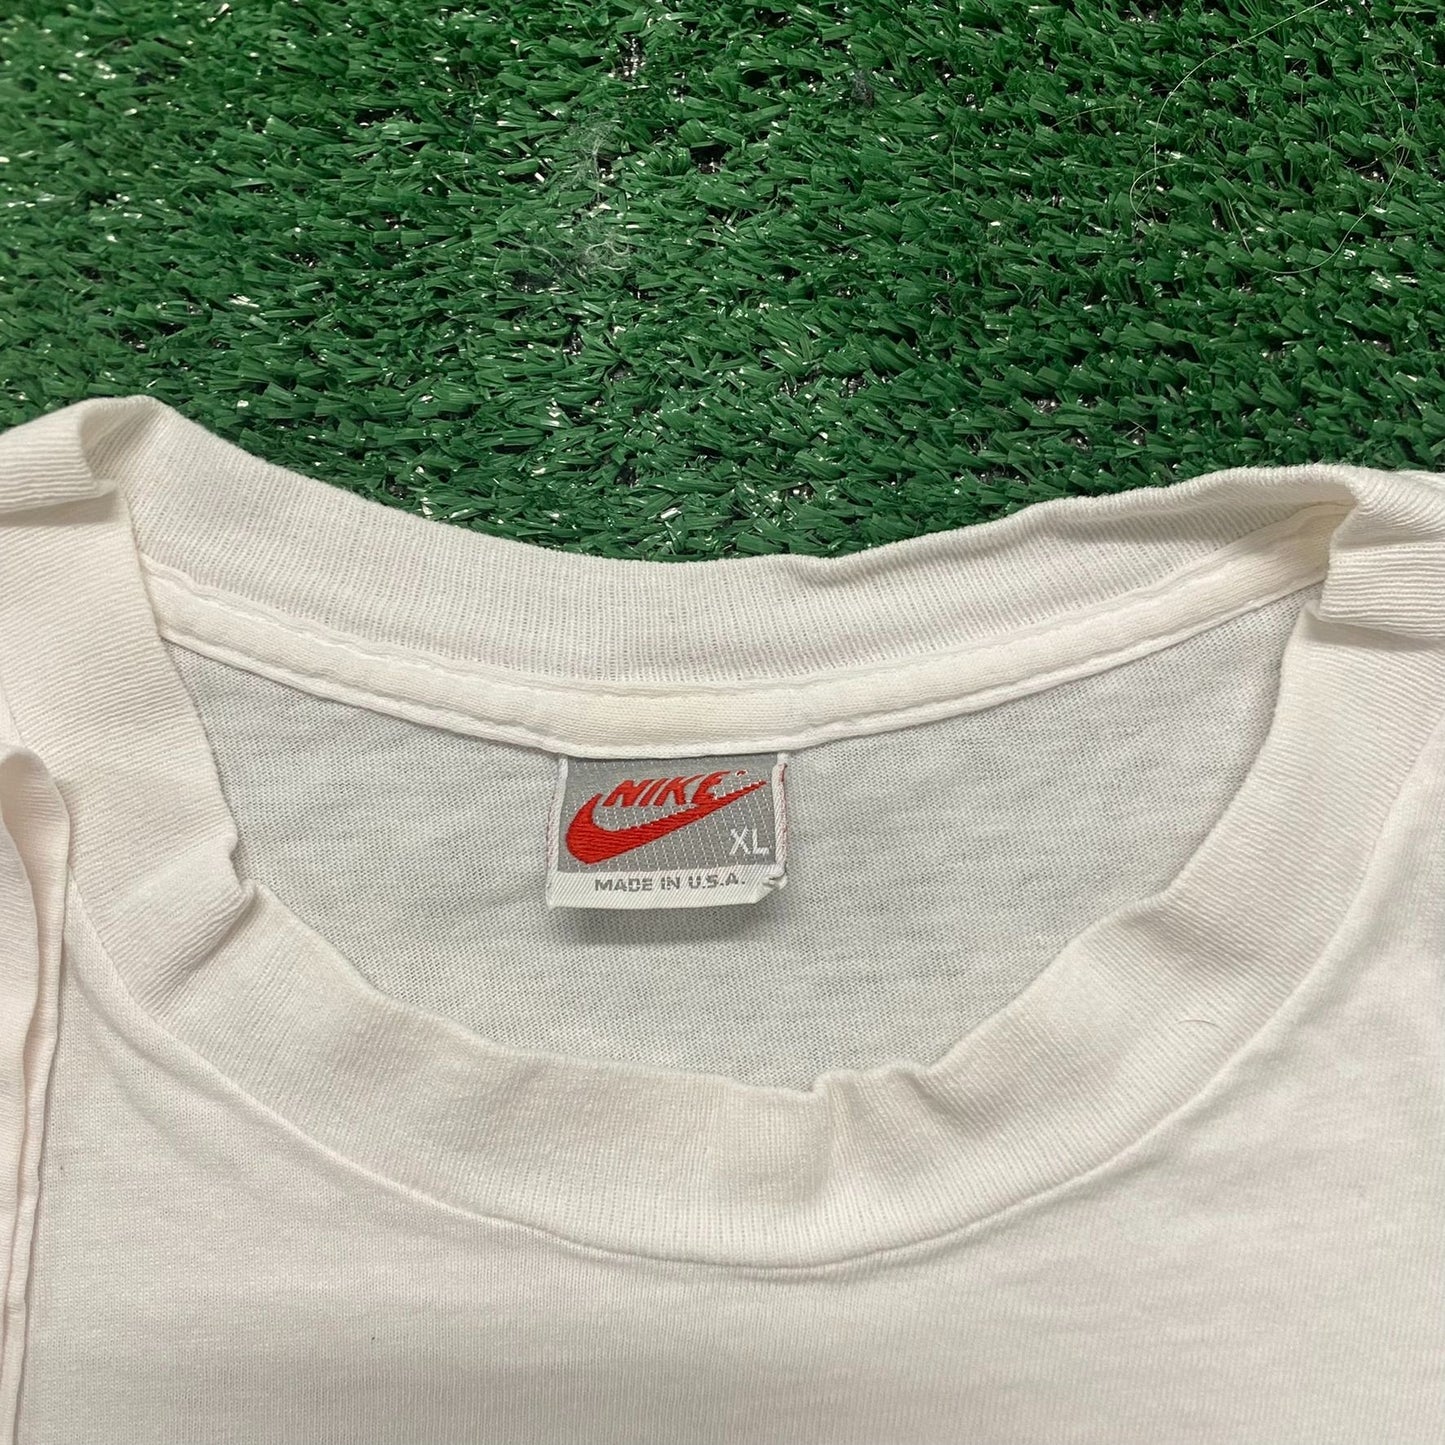 Vintage 90s Nike Swoosh Logo Single Stitch Essential T-Shirt